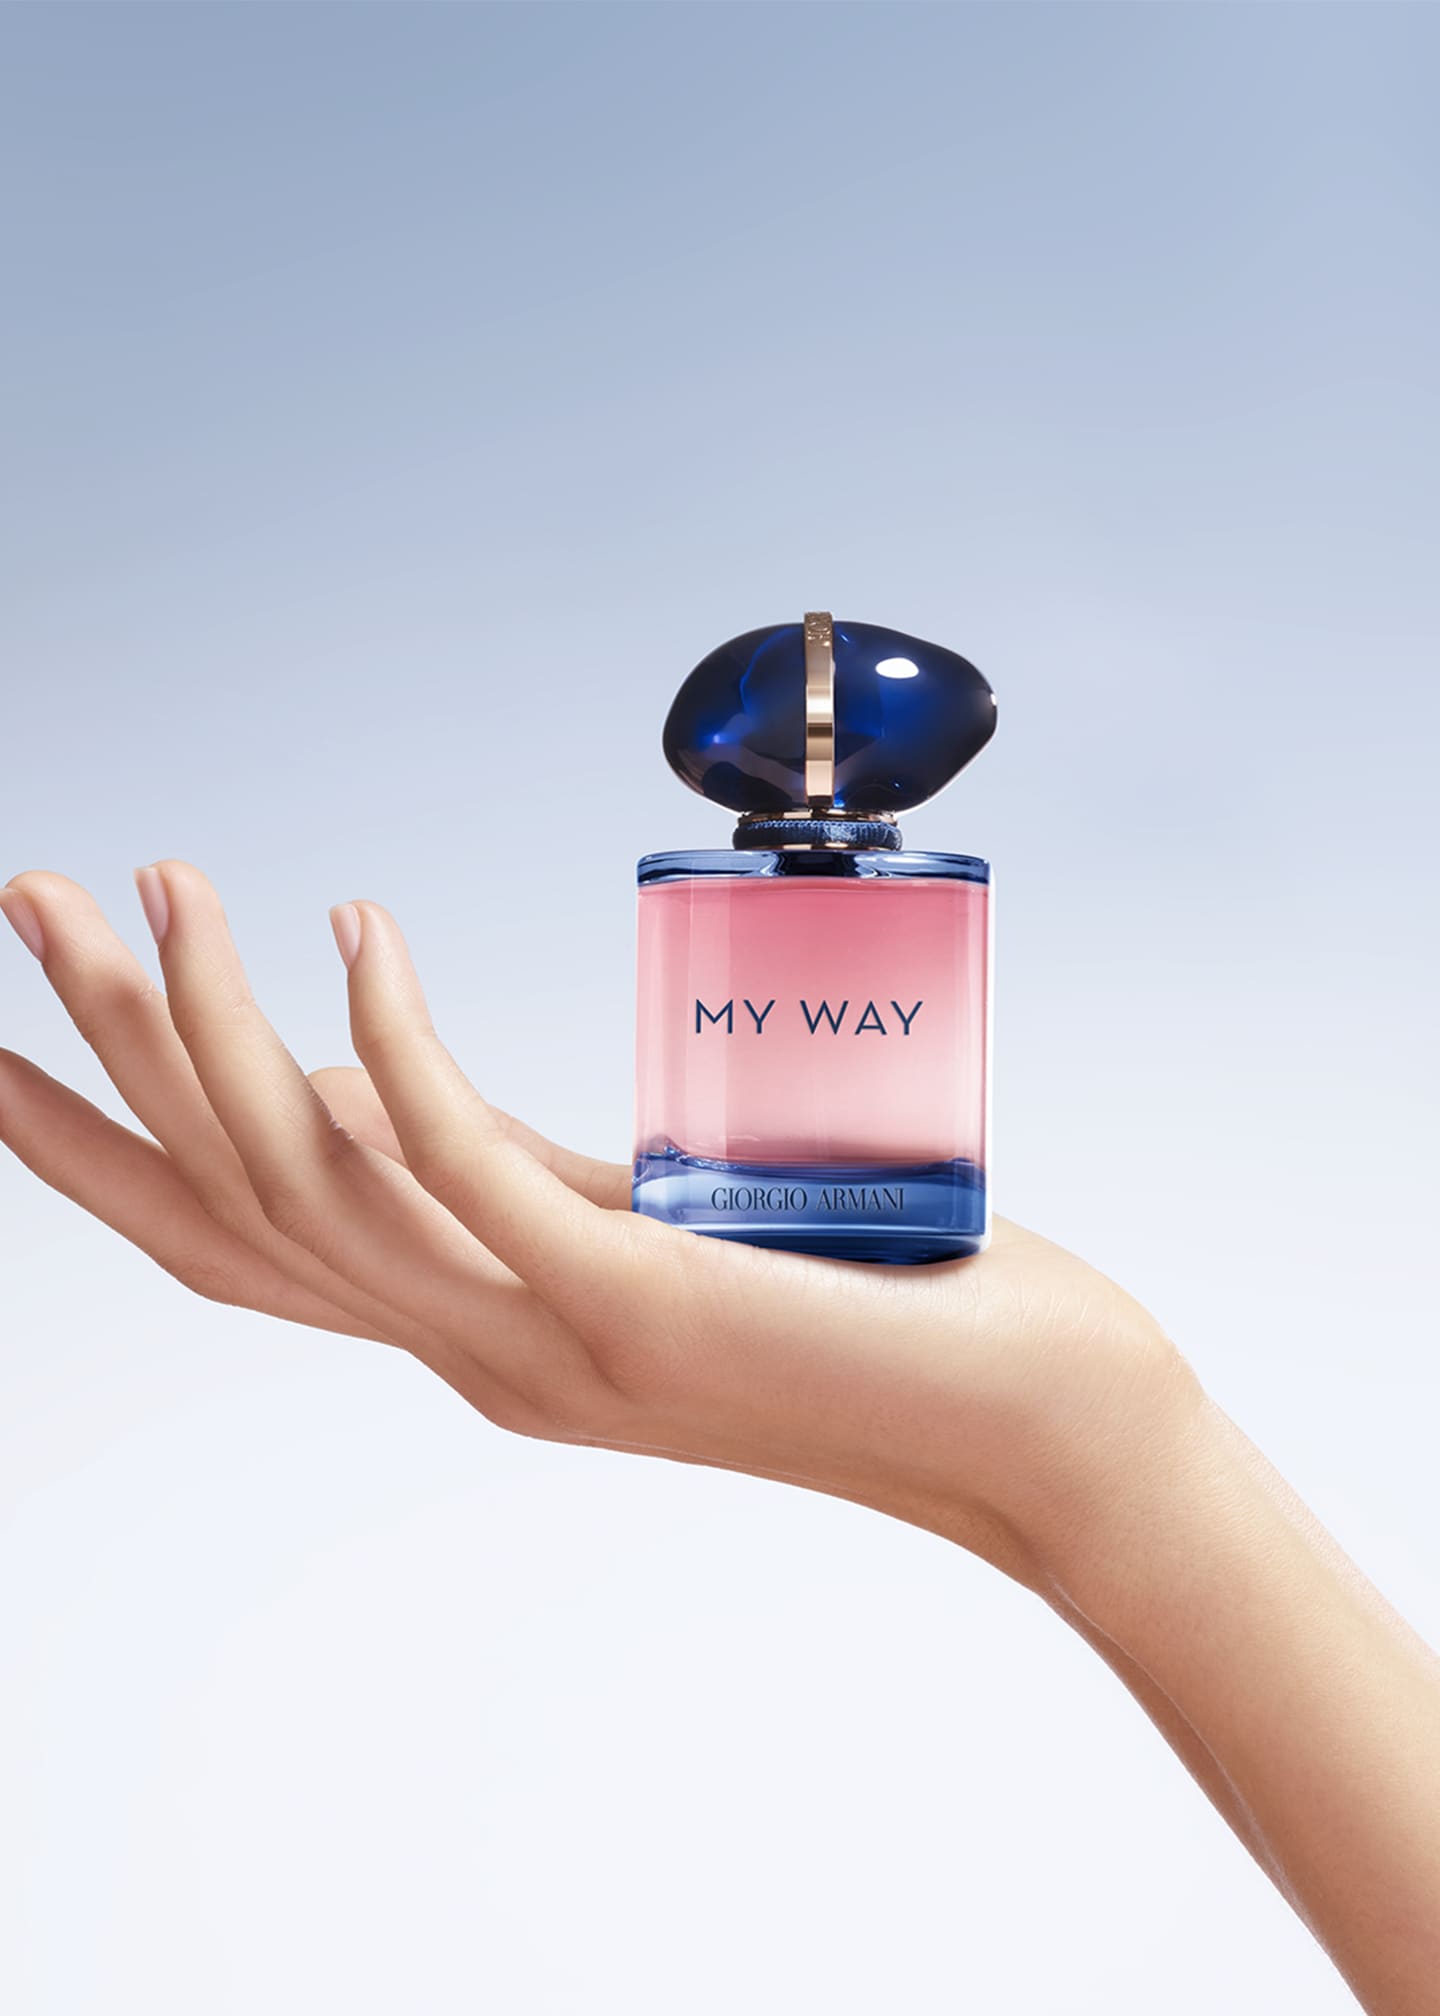 ARMANI beauty My Way Eau de Parfum Intense, 3.0 oz. - Bergdorf Goodman